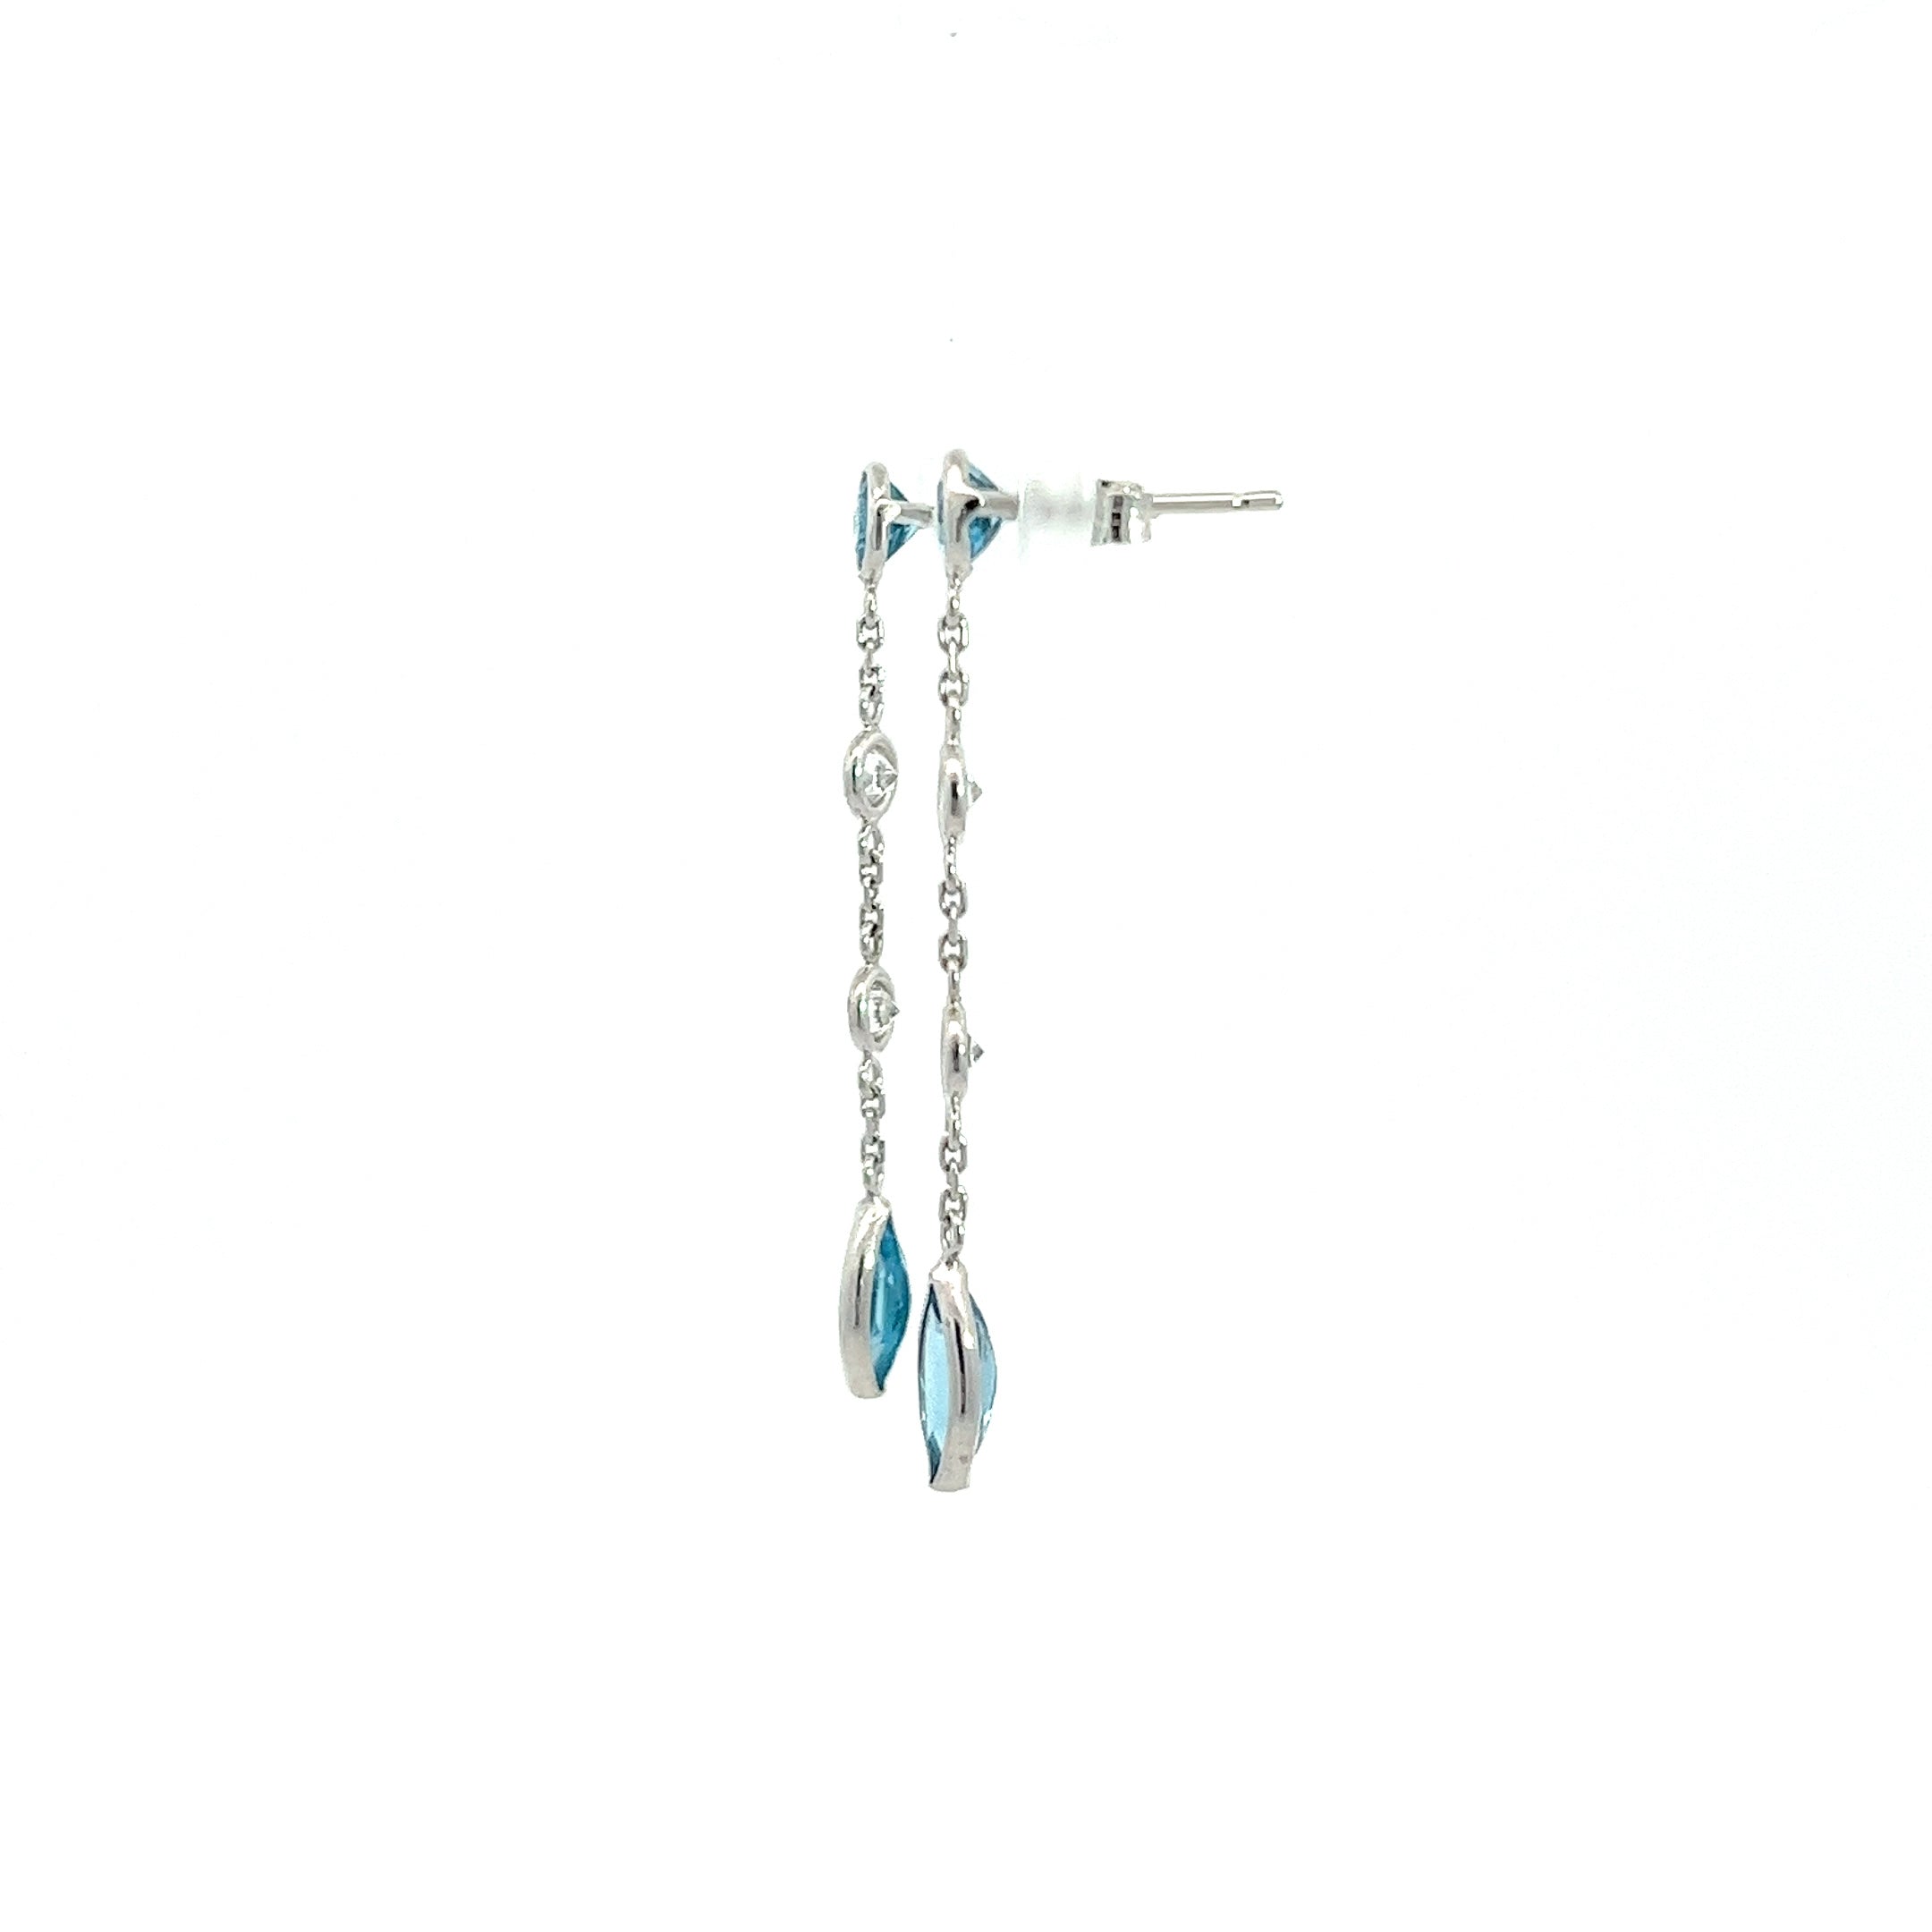 Blue topaz earrings with diamonds__2023-06-24-11-07-41.jpg